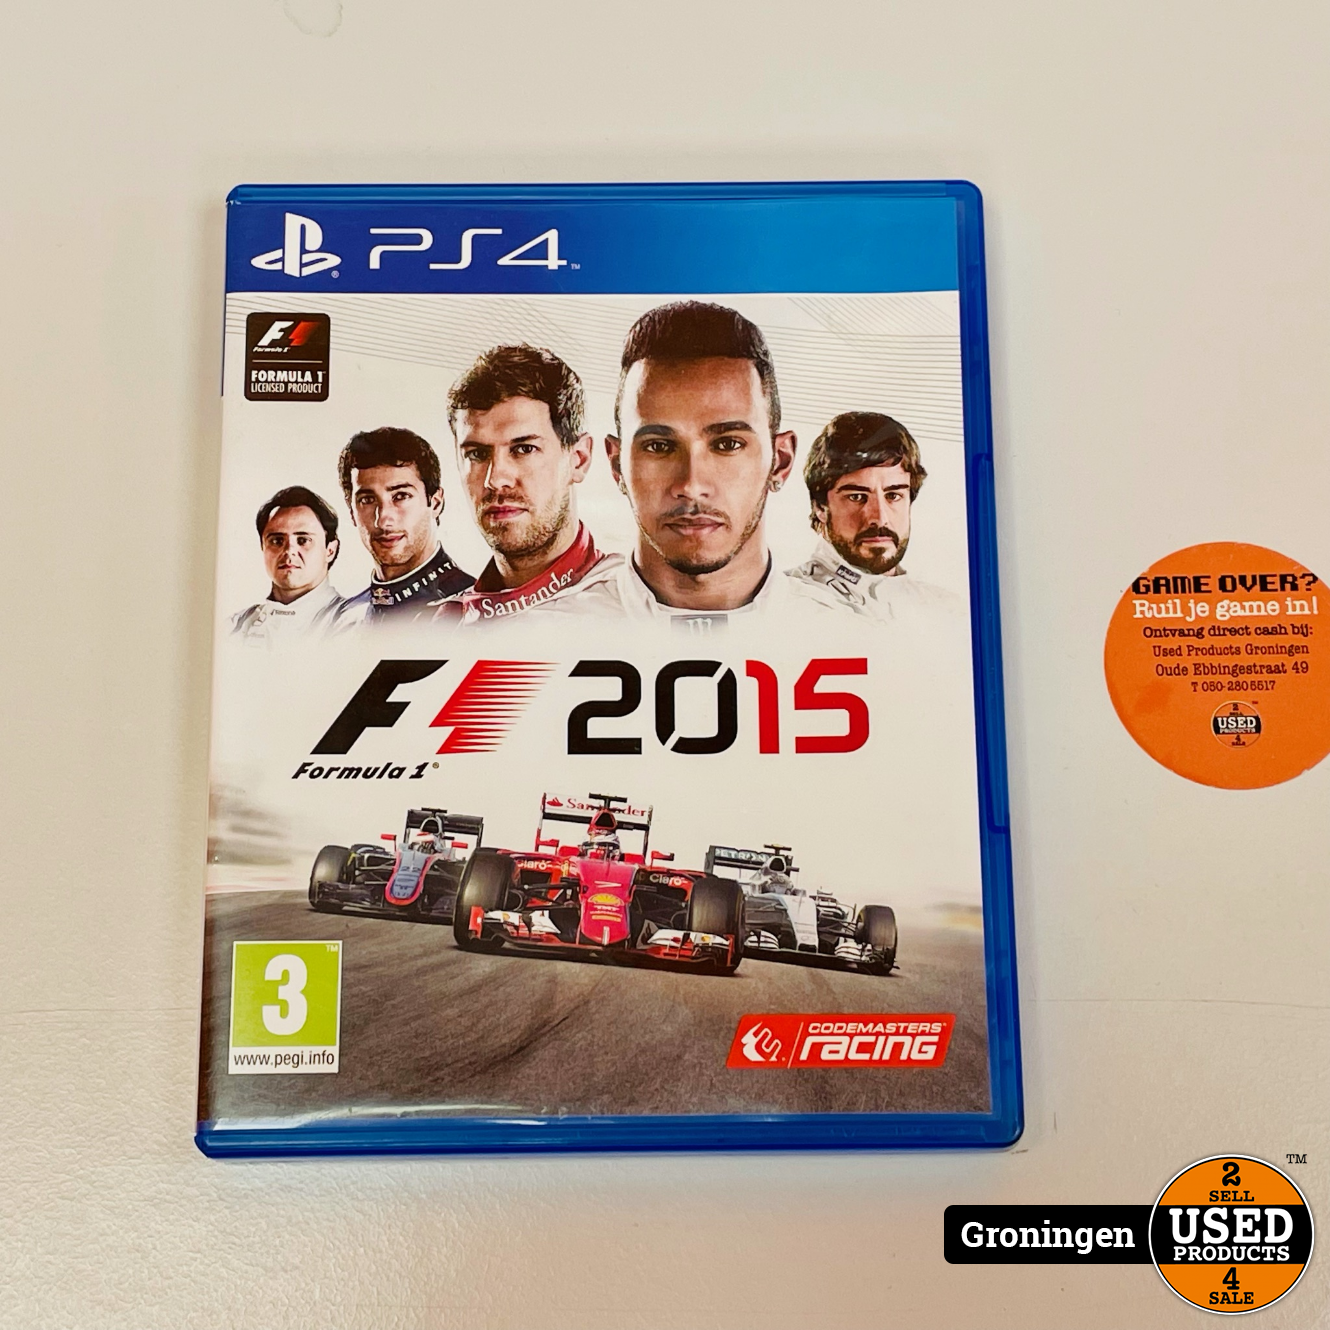 middernacht Geniet optellen Sony PS4 [PS4] Formula 1 / F1 2015 - Used Products Groningen